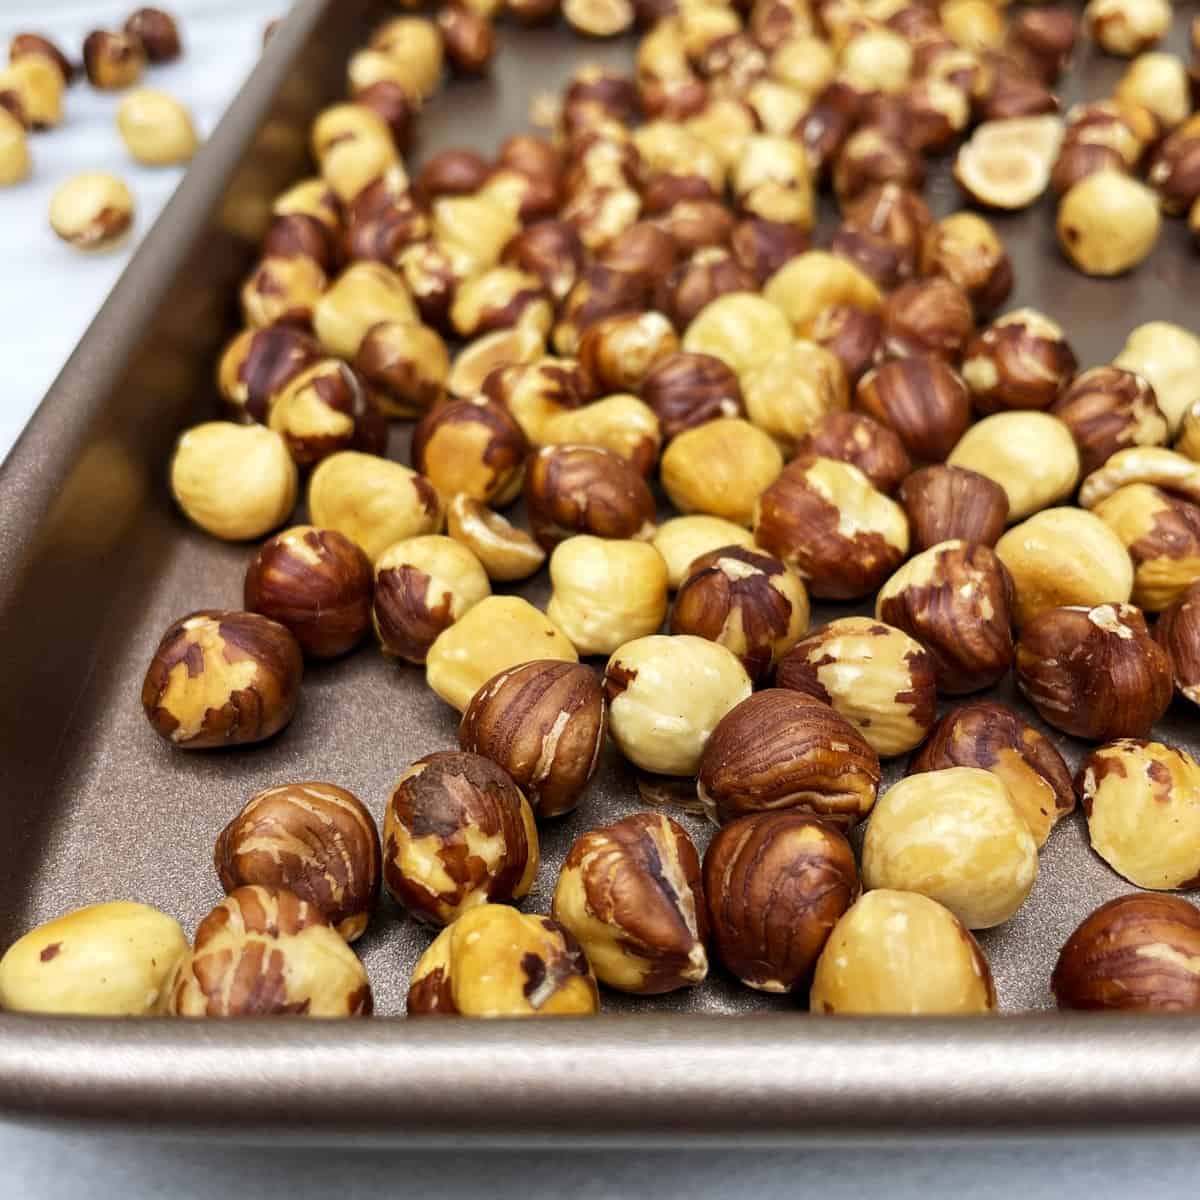 Roasted hazelnuts on a baking sheet